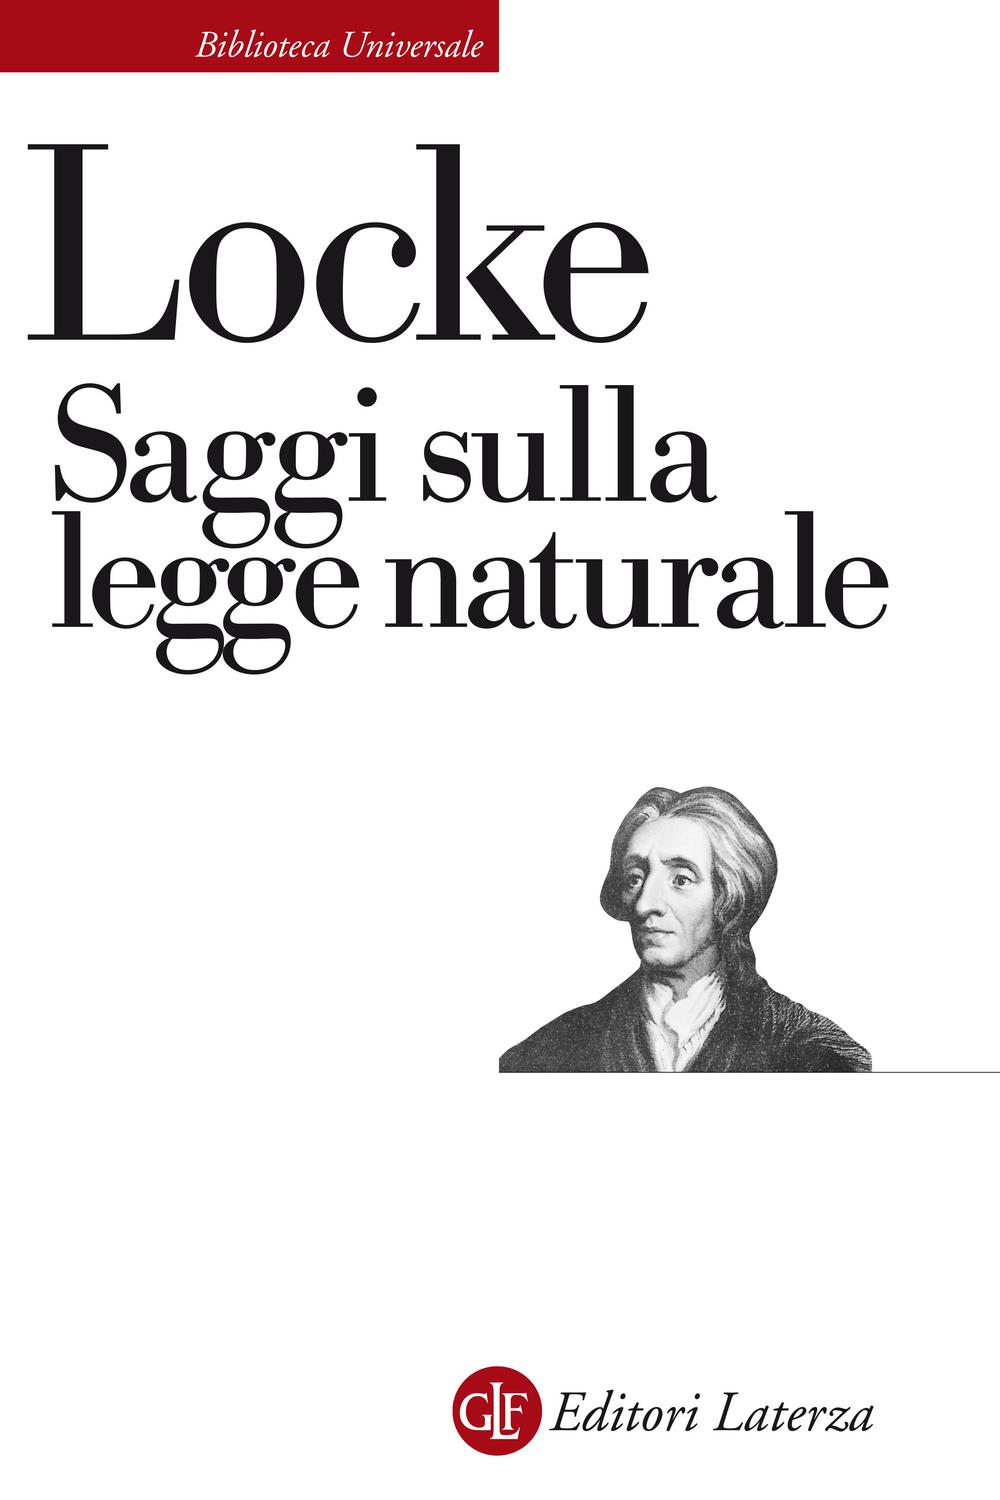 Saggi sulla legge naturale - John Locke